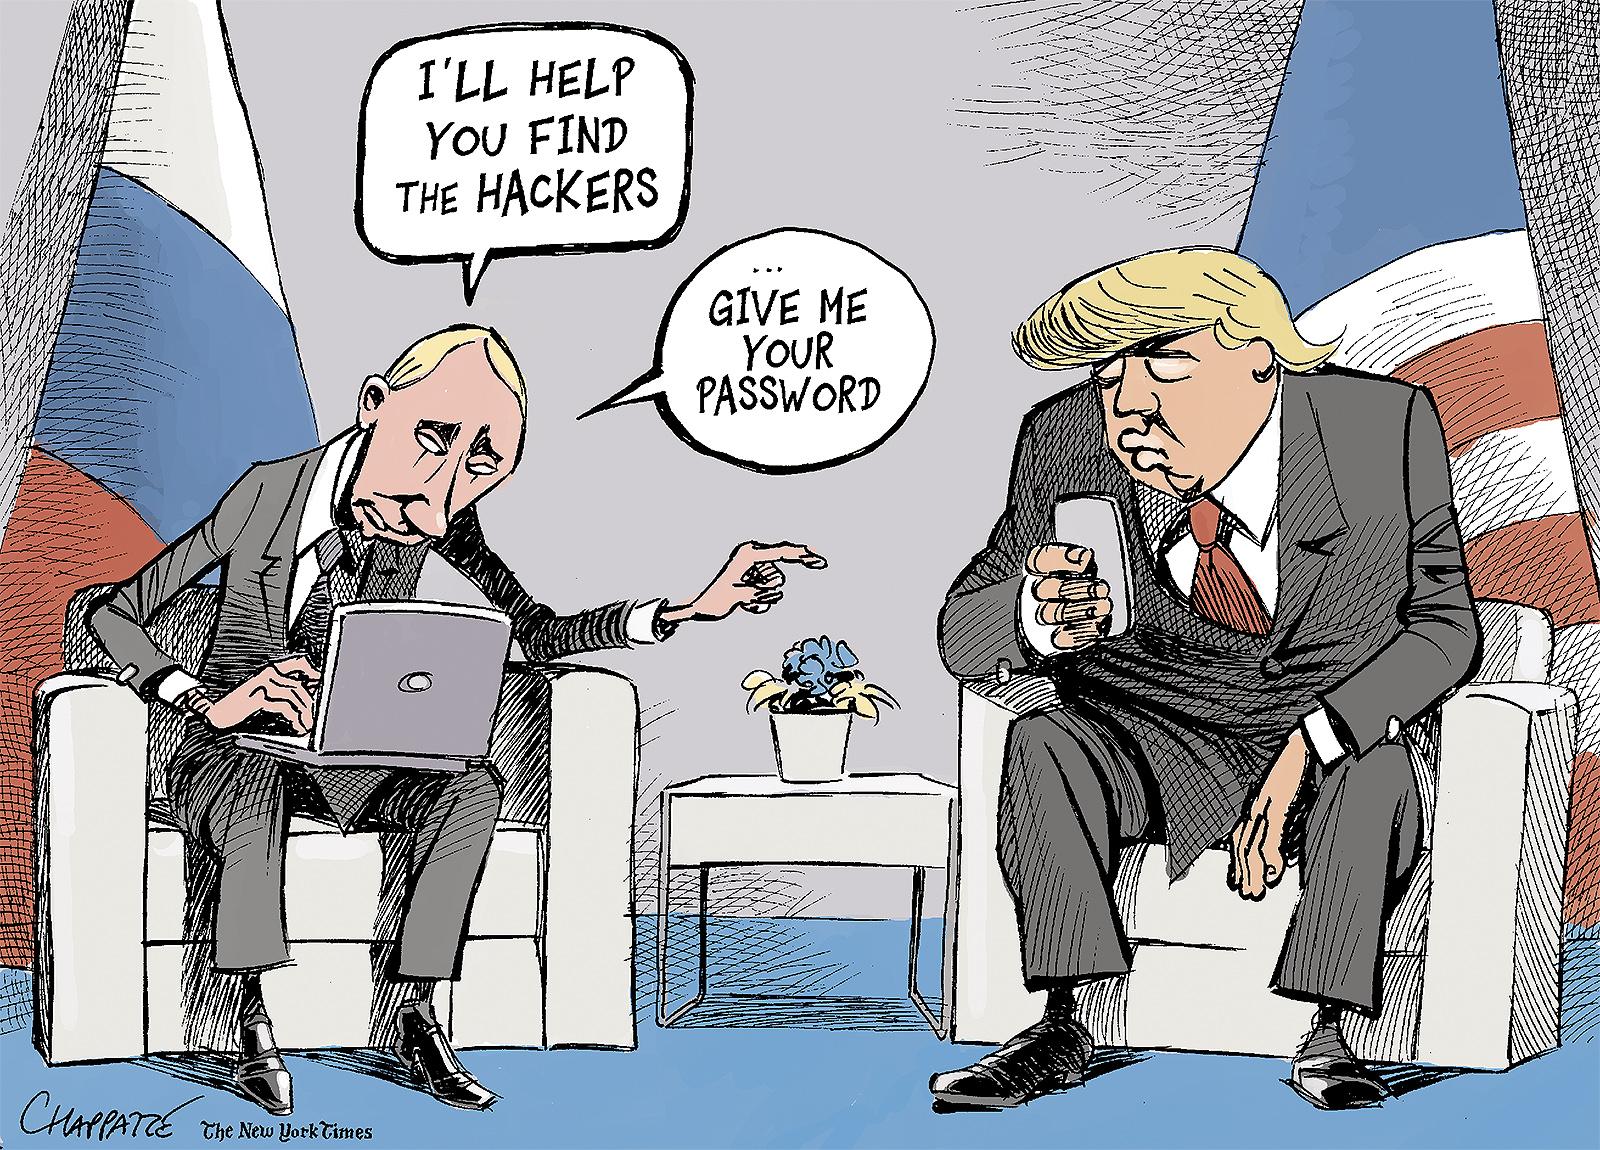 When Putin and Trump meet